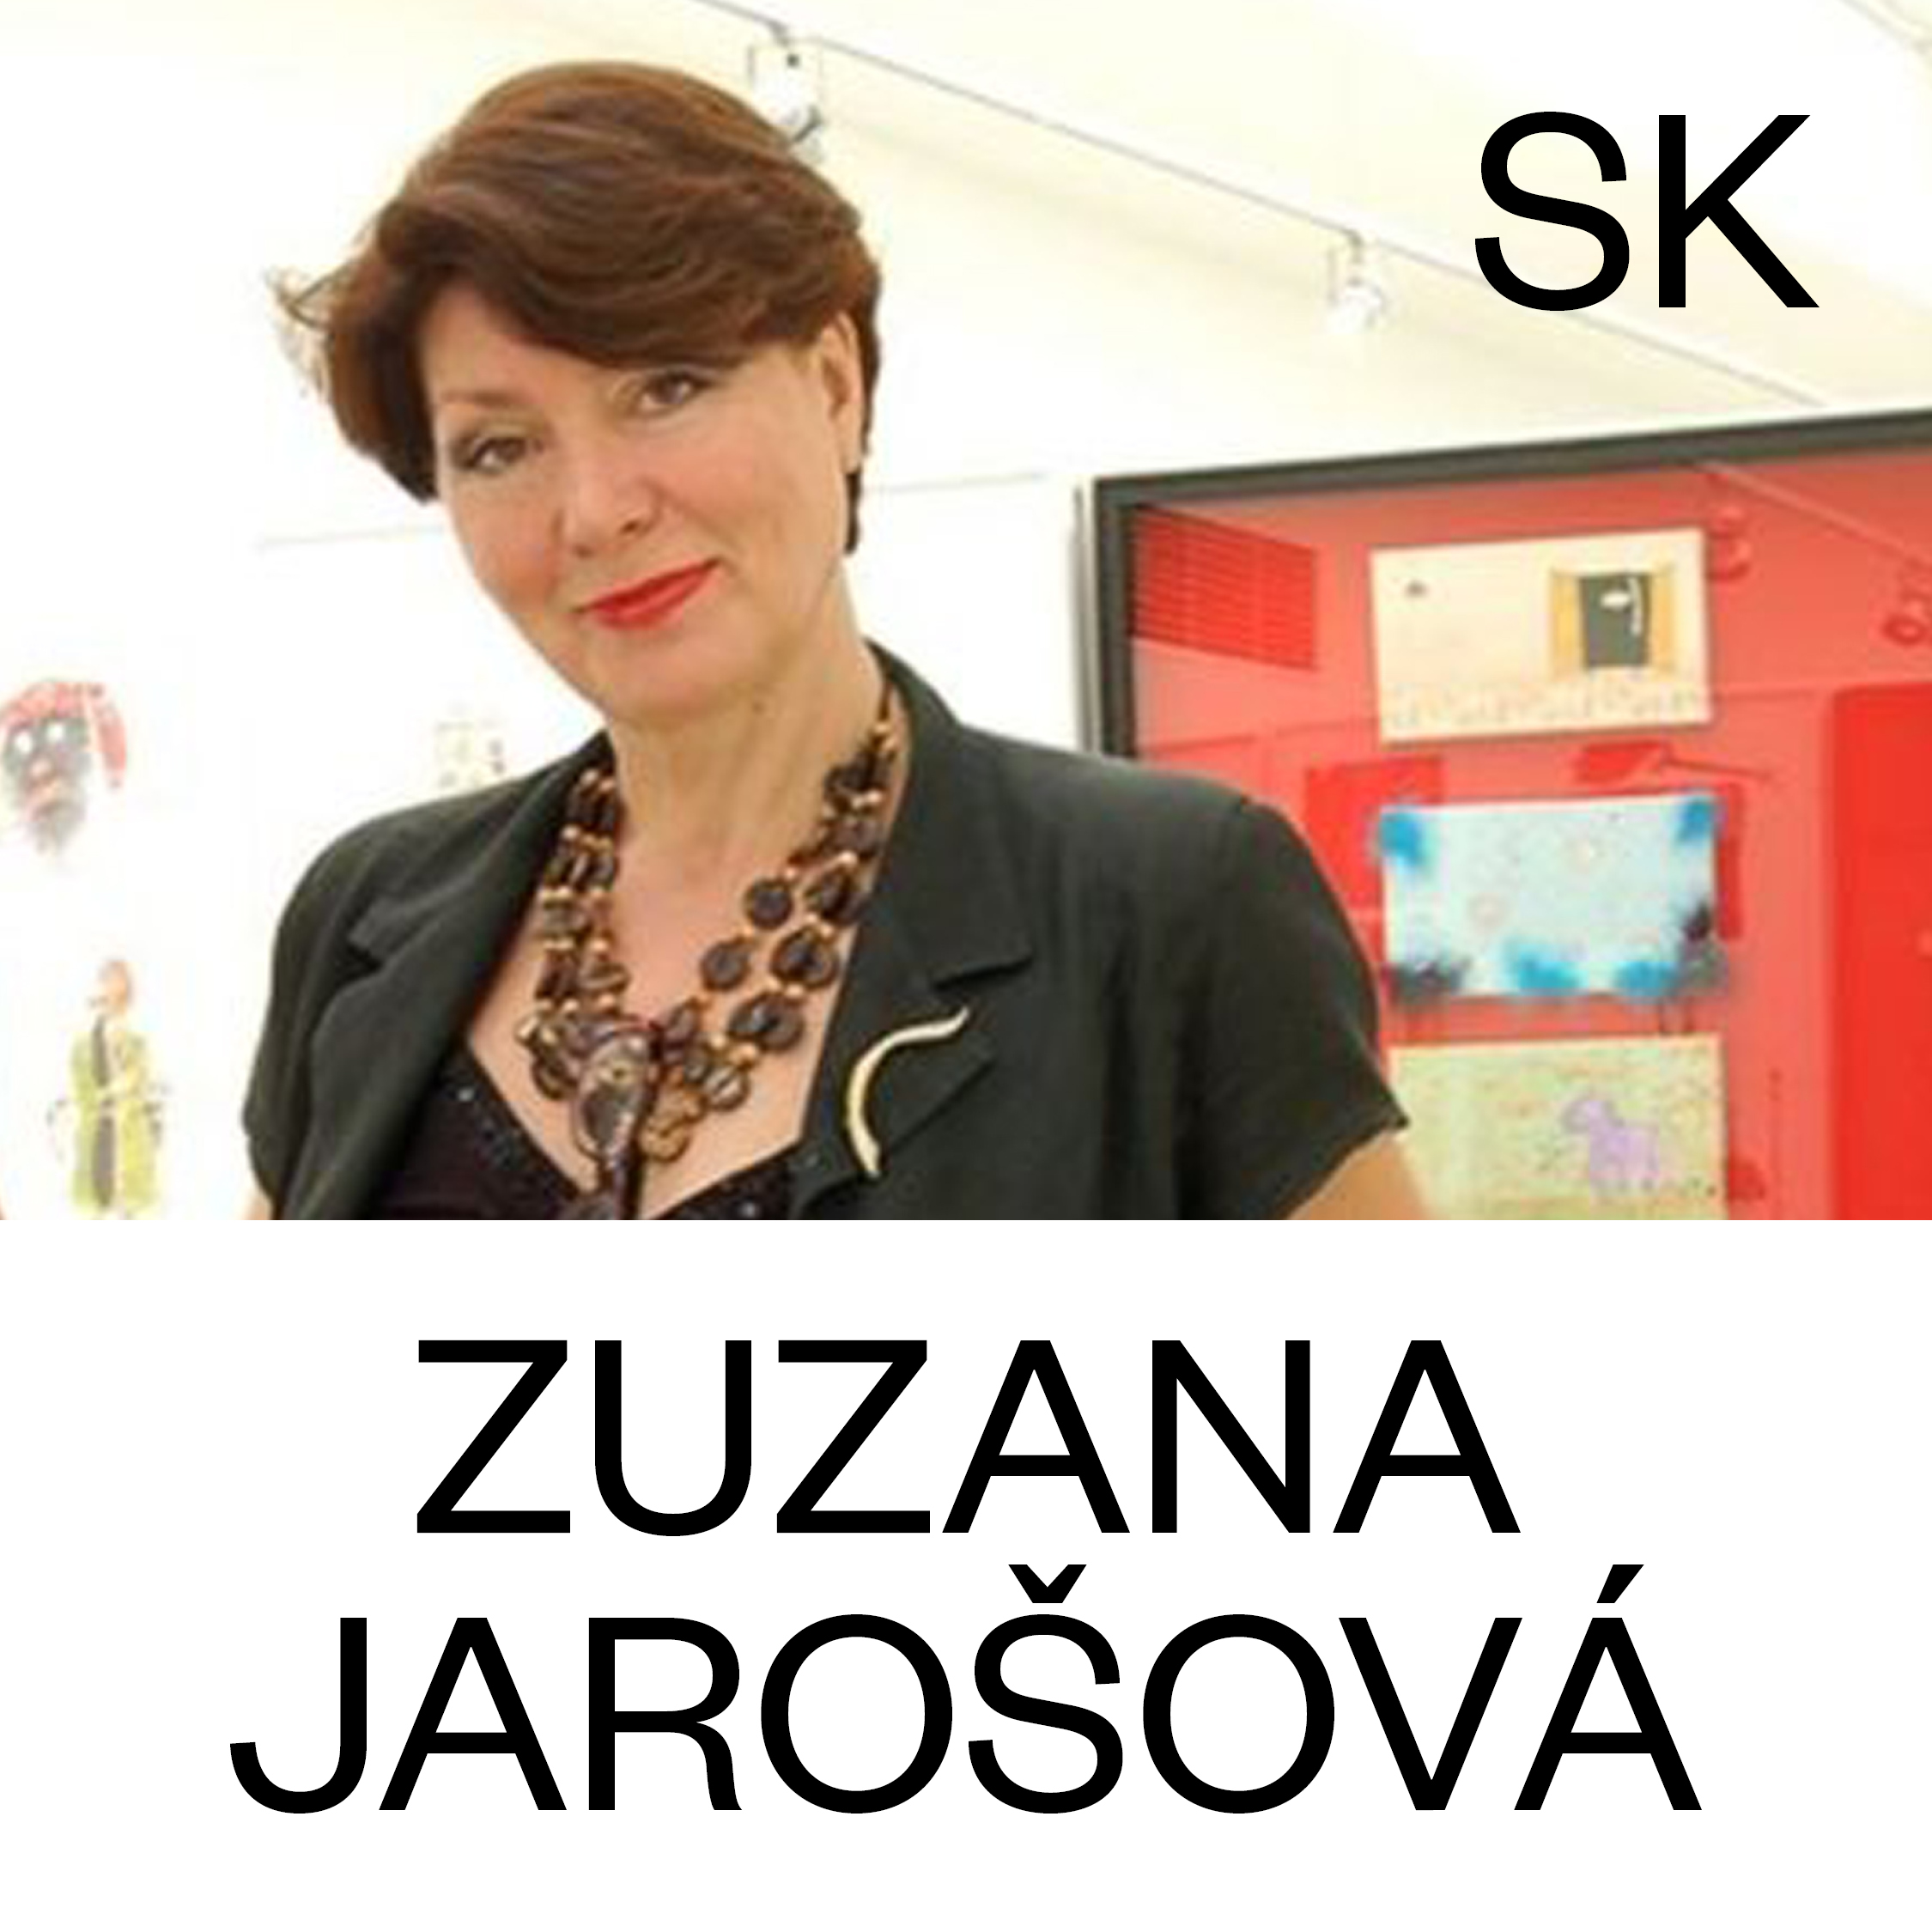 Zuzana Jarosova